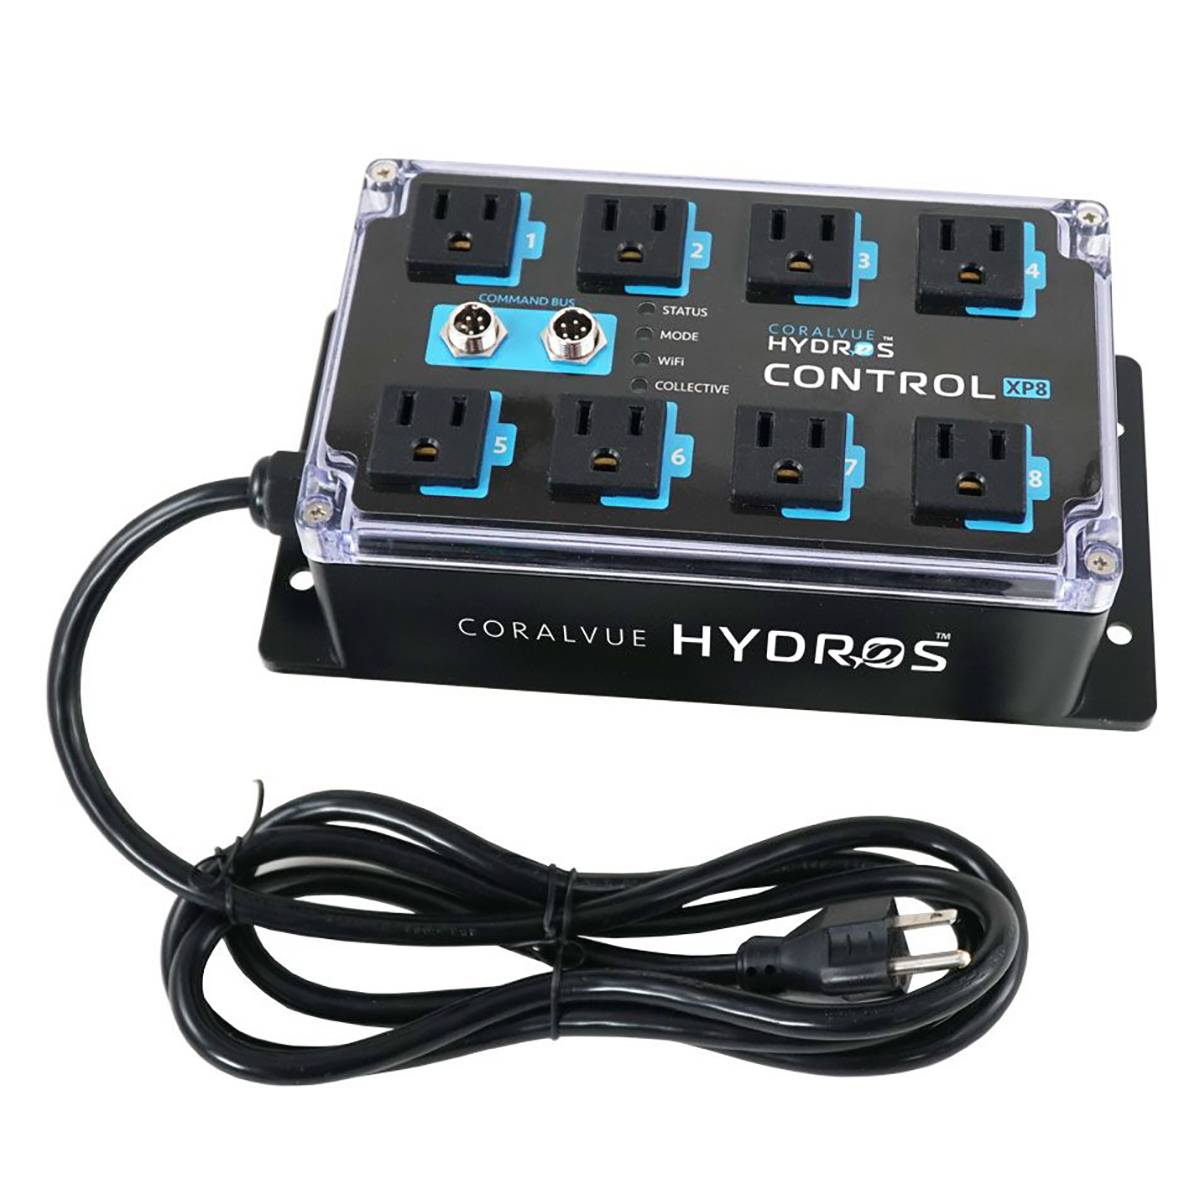 Hydros Control XP8 Energy Bar Aquarium Controller - CoralVue - Hydros